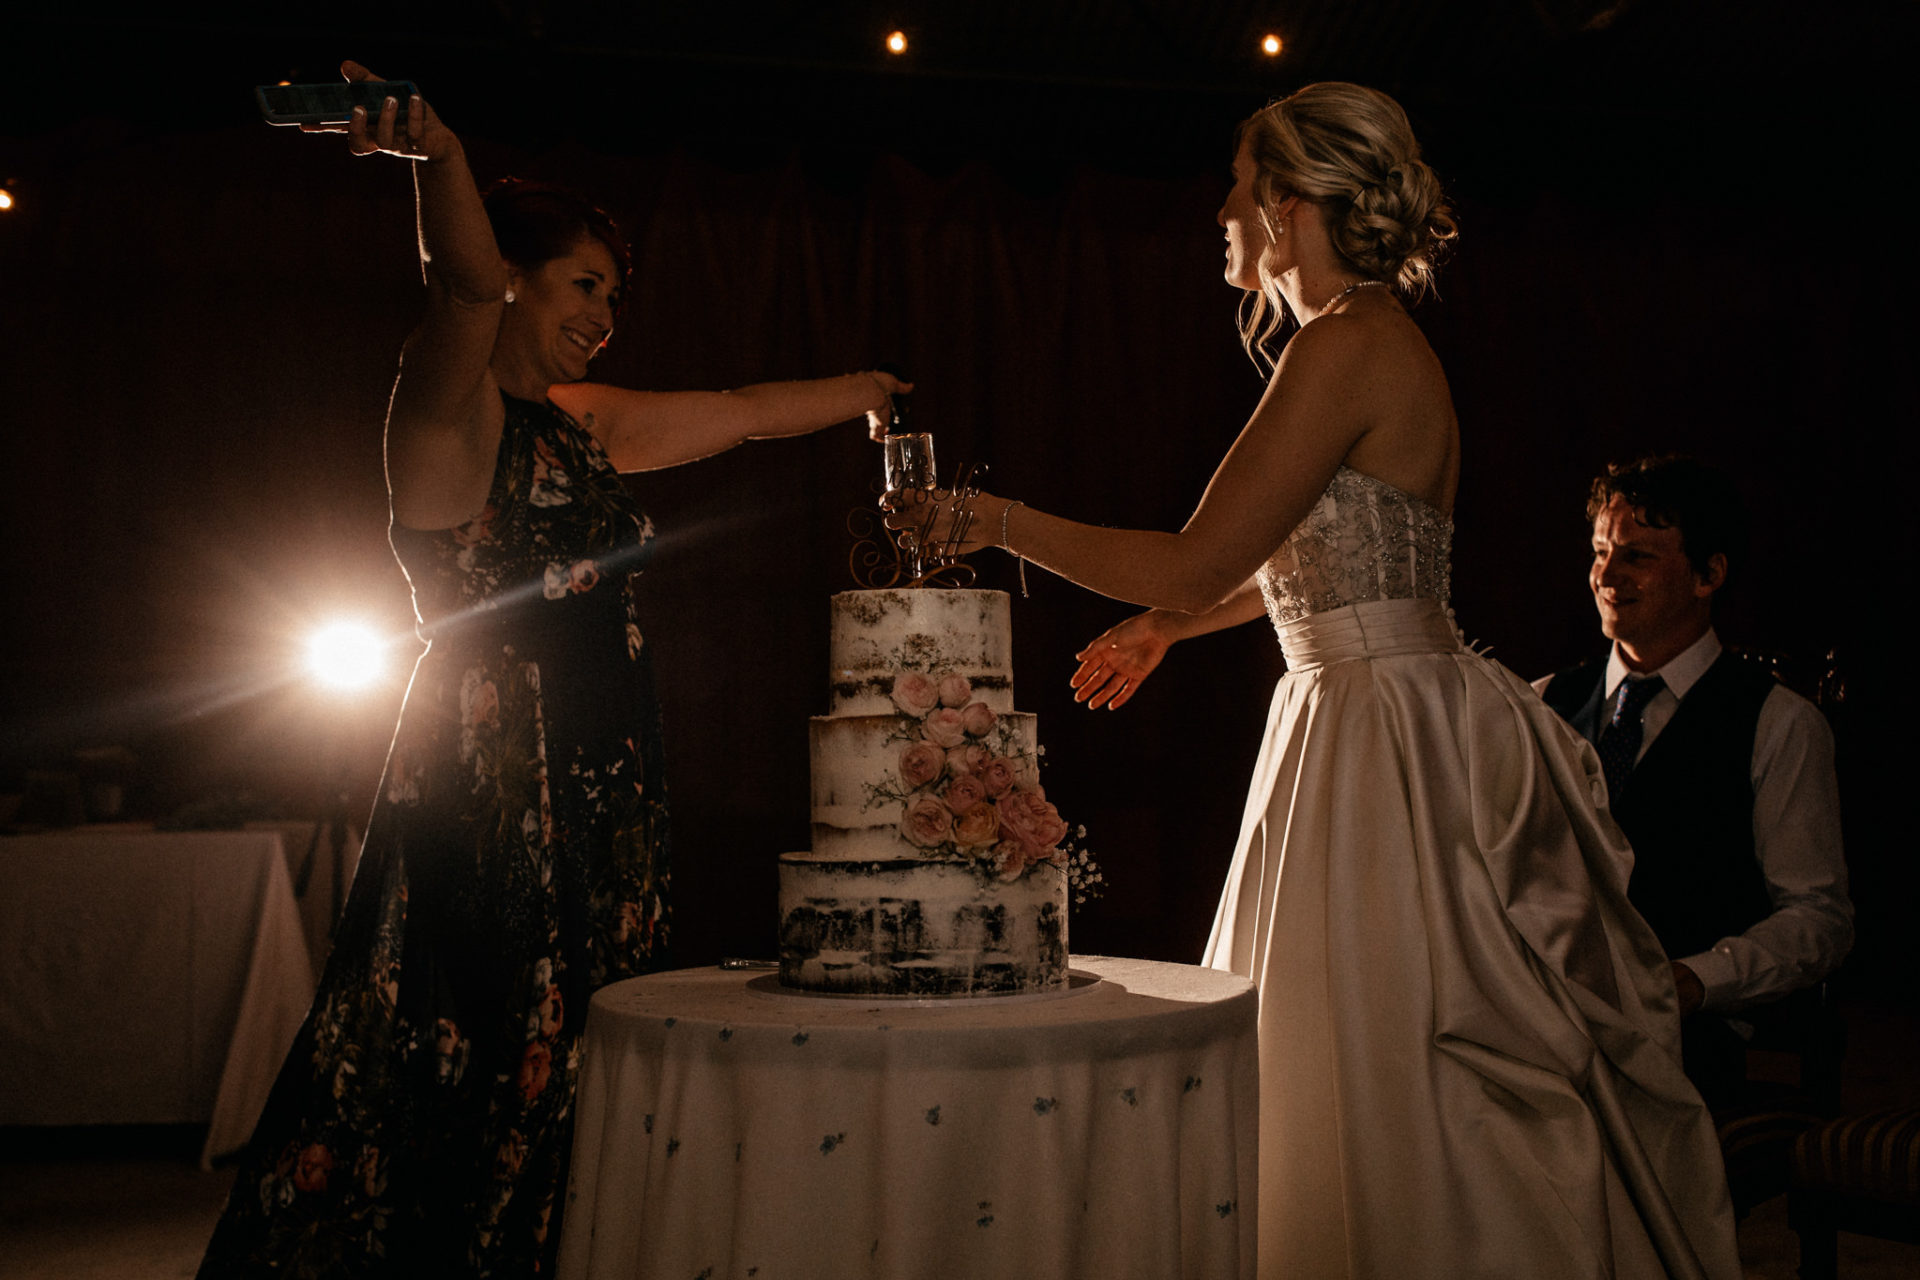 backyard-wedding-australia-melbourne-bride-bridesmaid-speeches-hug-wedding-cake